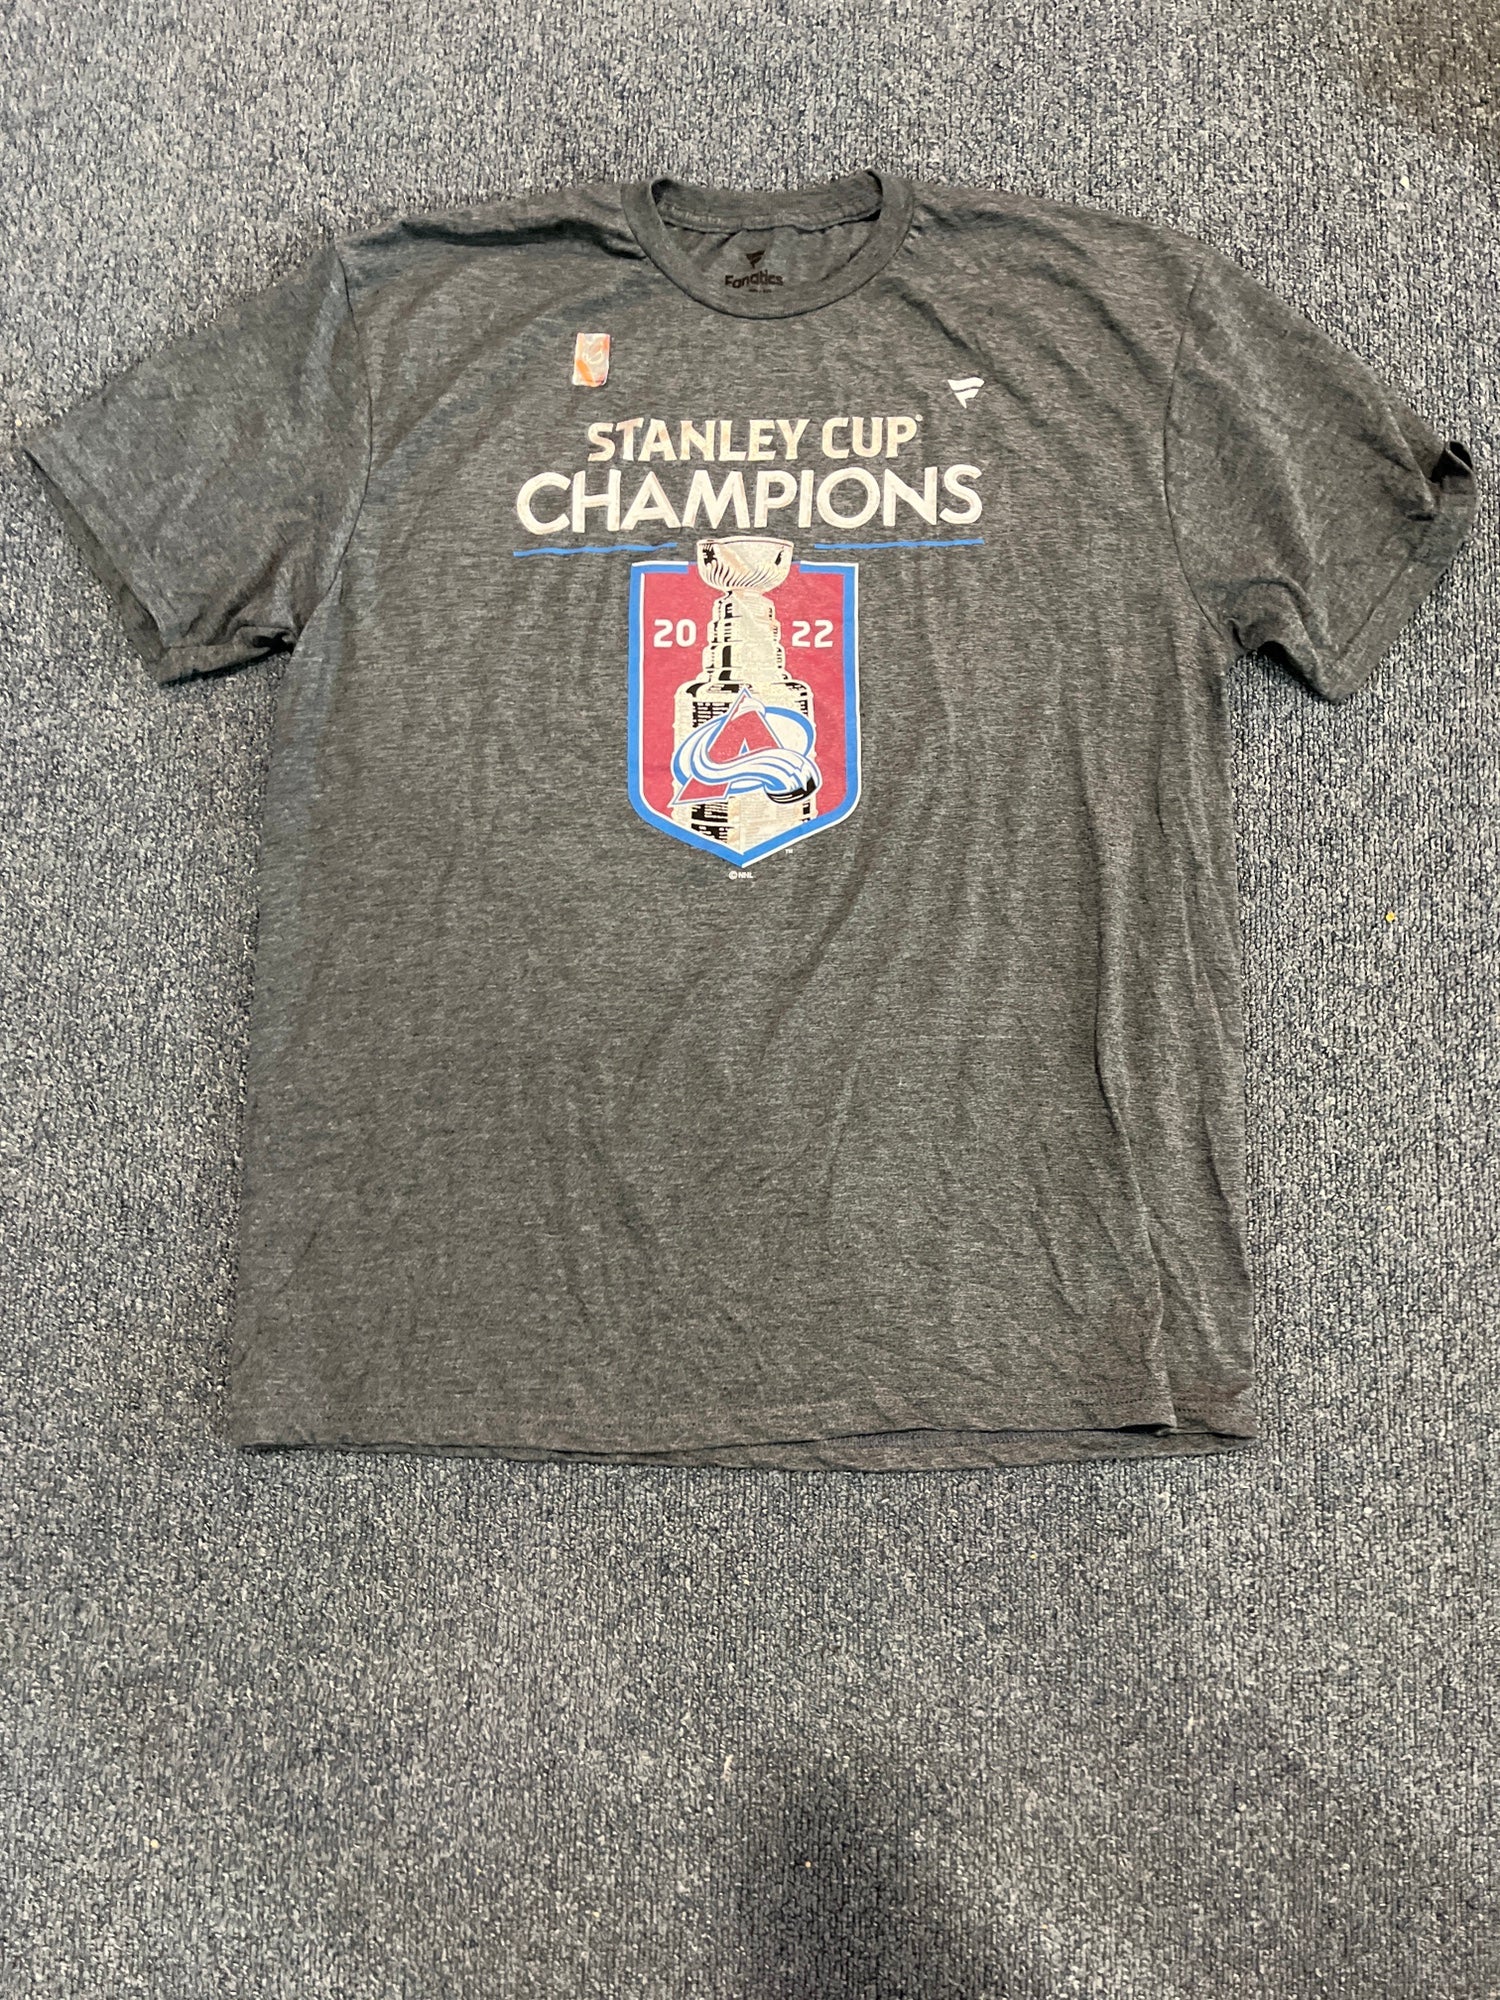 Stanley cup champions St louis blues 4 3 boston bruins shirt - Kingteeshop